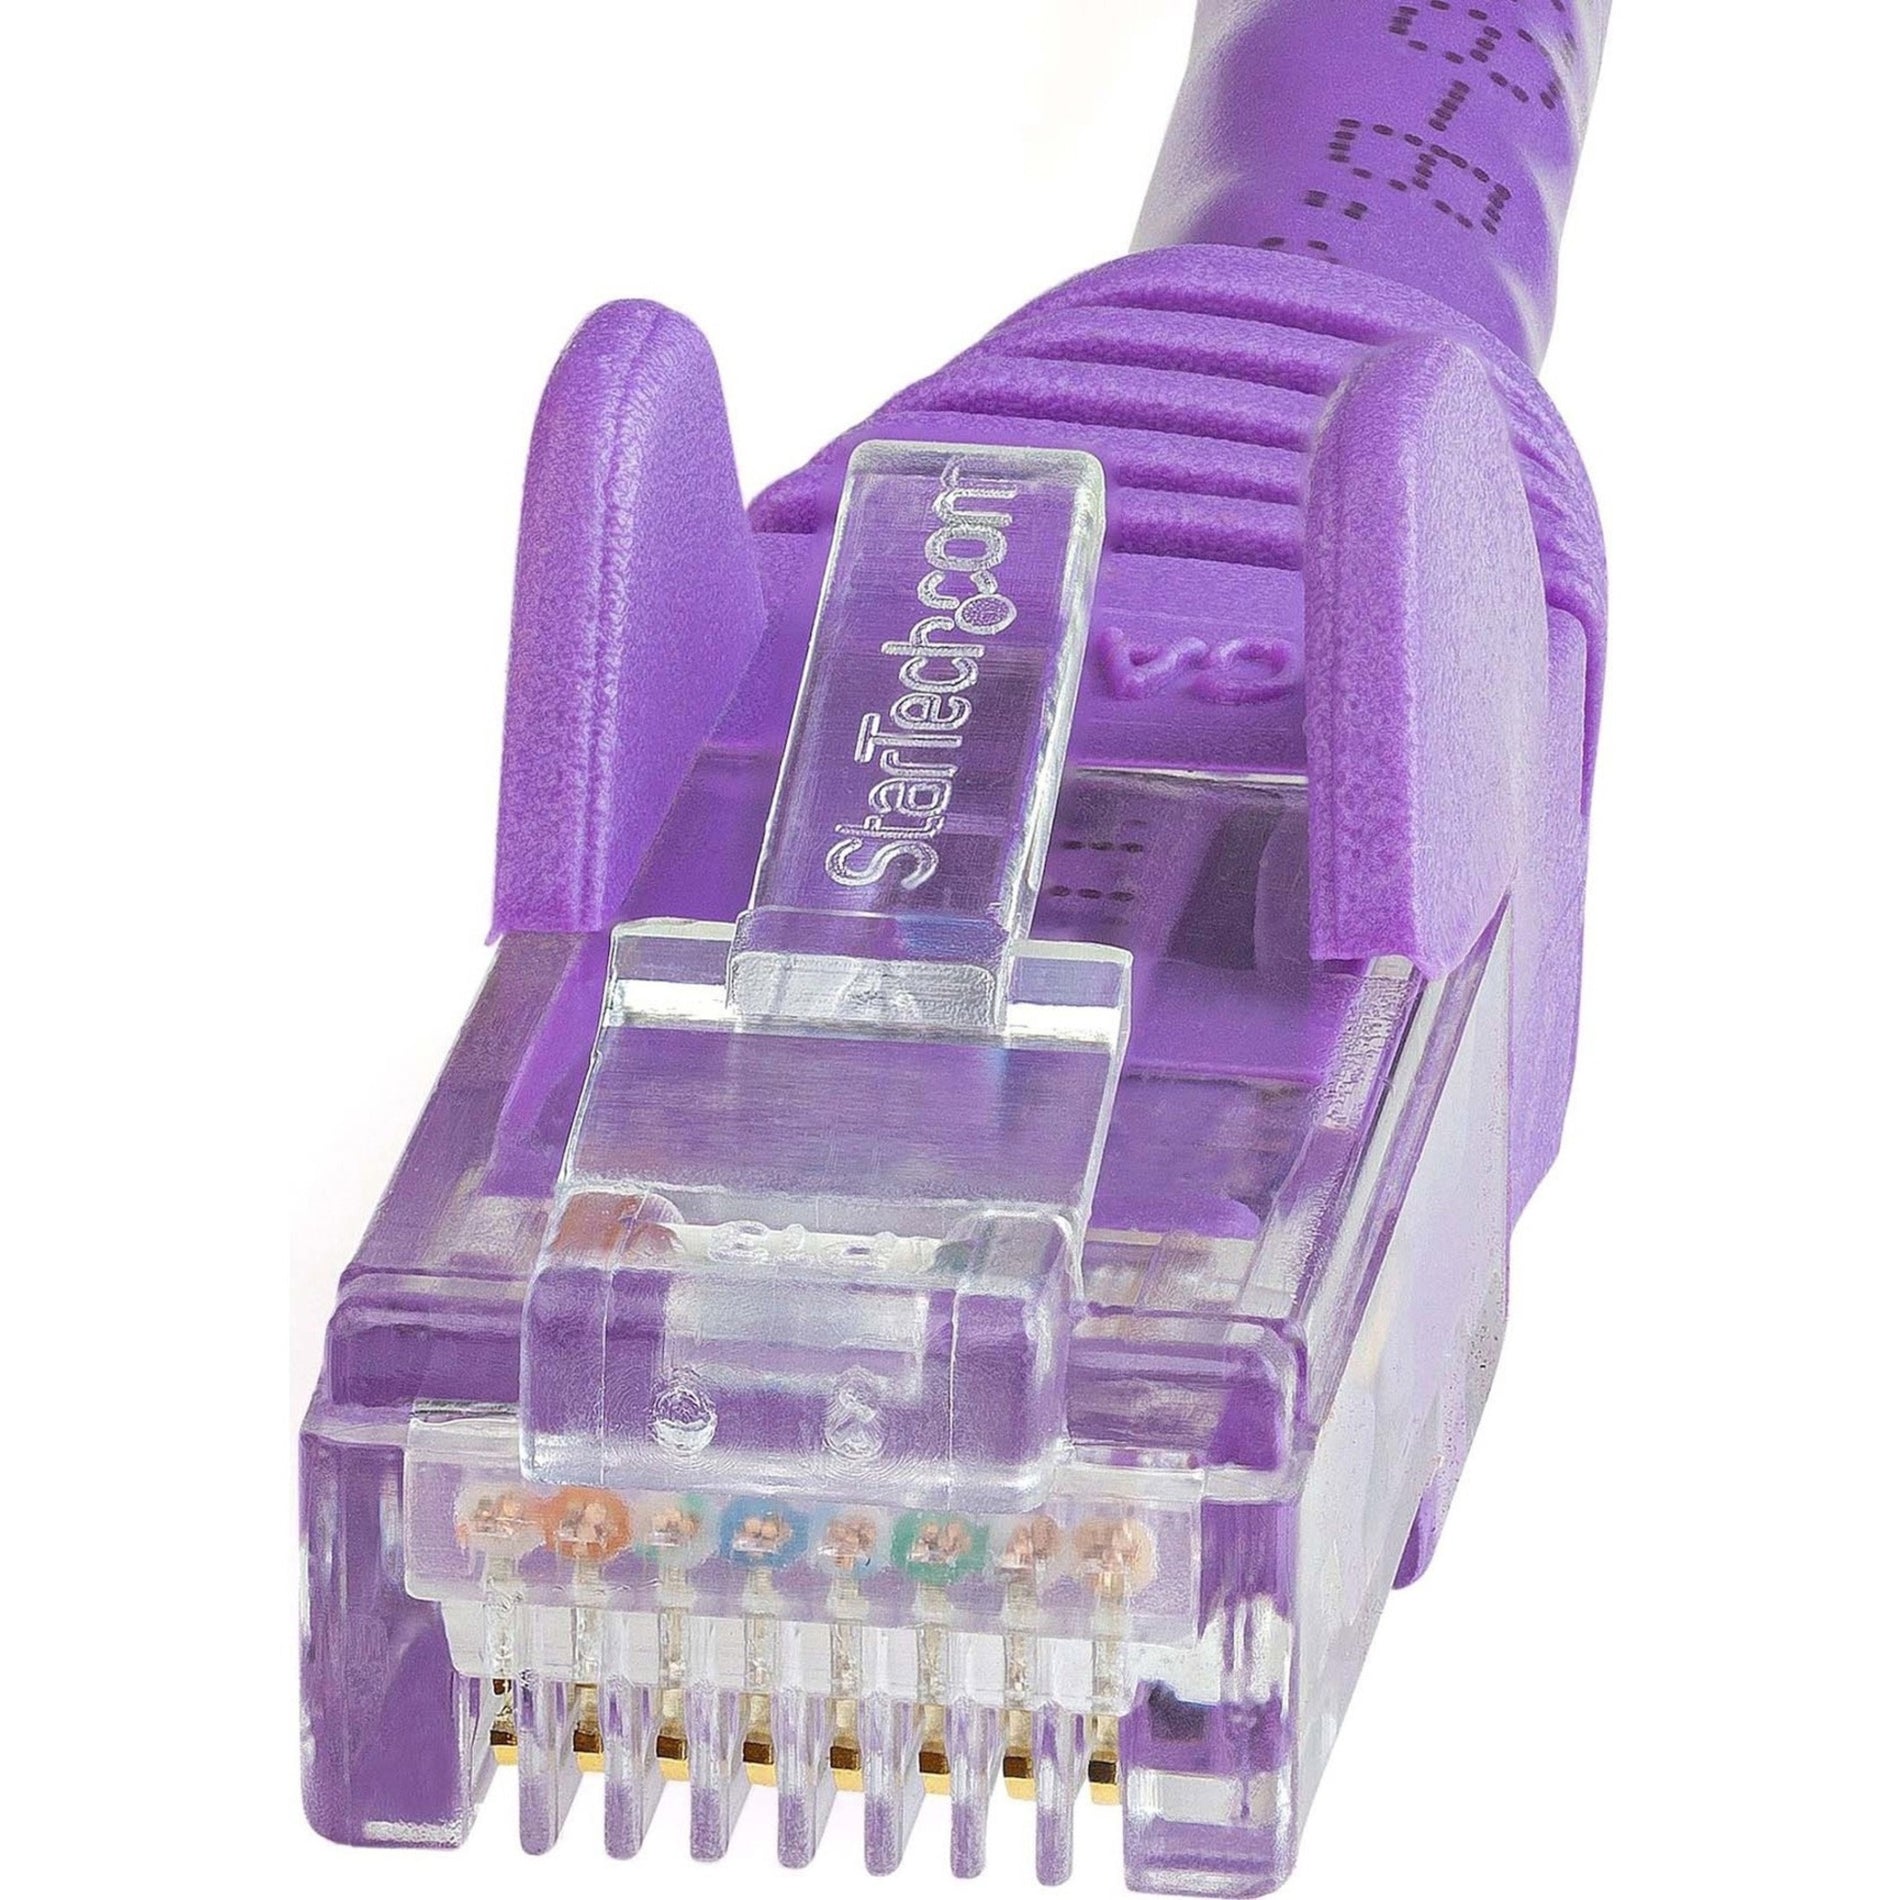 StarTech.com N6PATCH50PL 50 ft. Cat6 Patch Cable - Purple, Stress Resistant, Strain Relief, 10 Gbit/s Data Transfer Rate